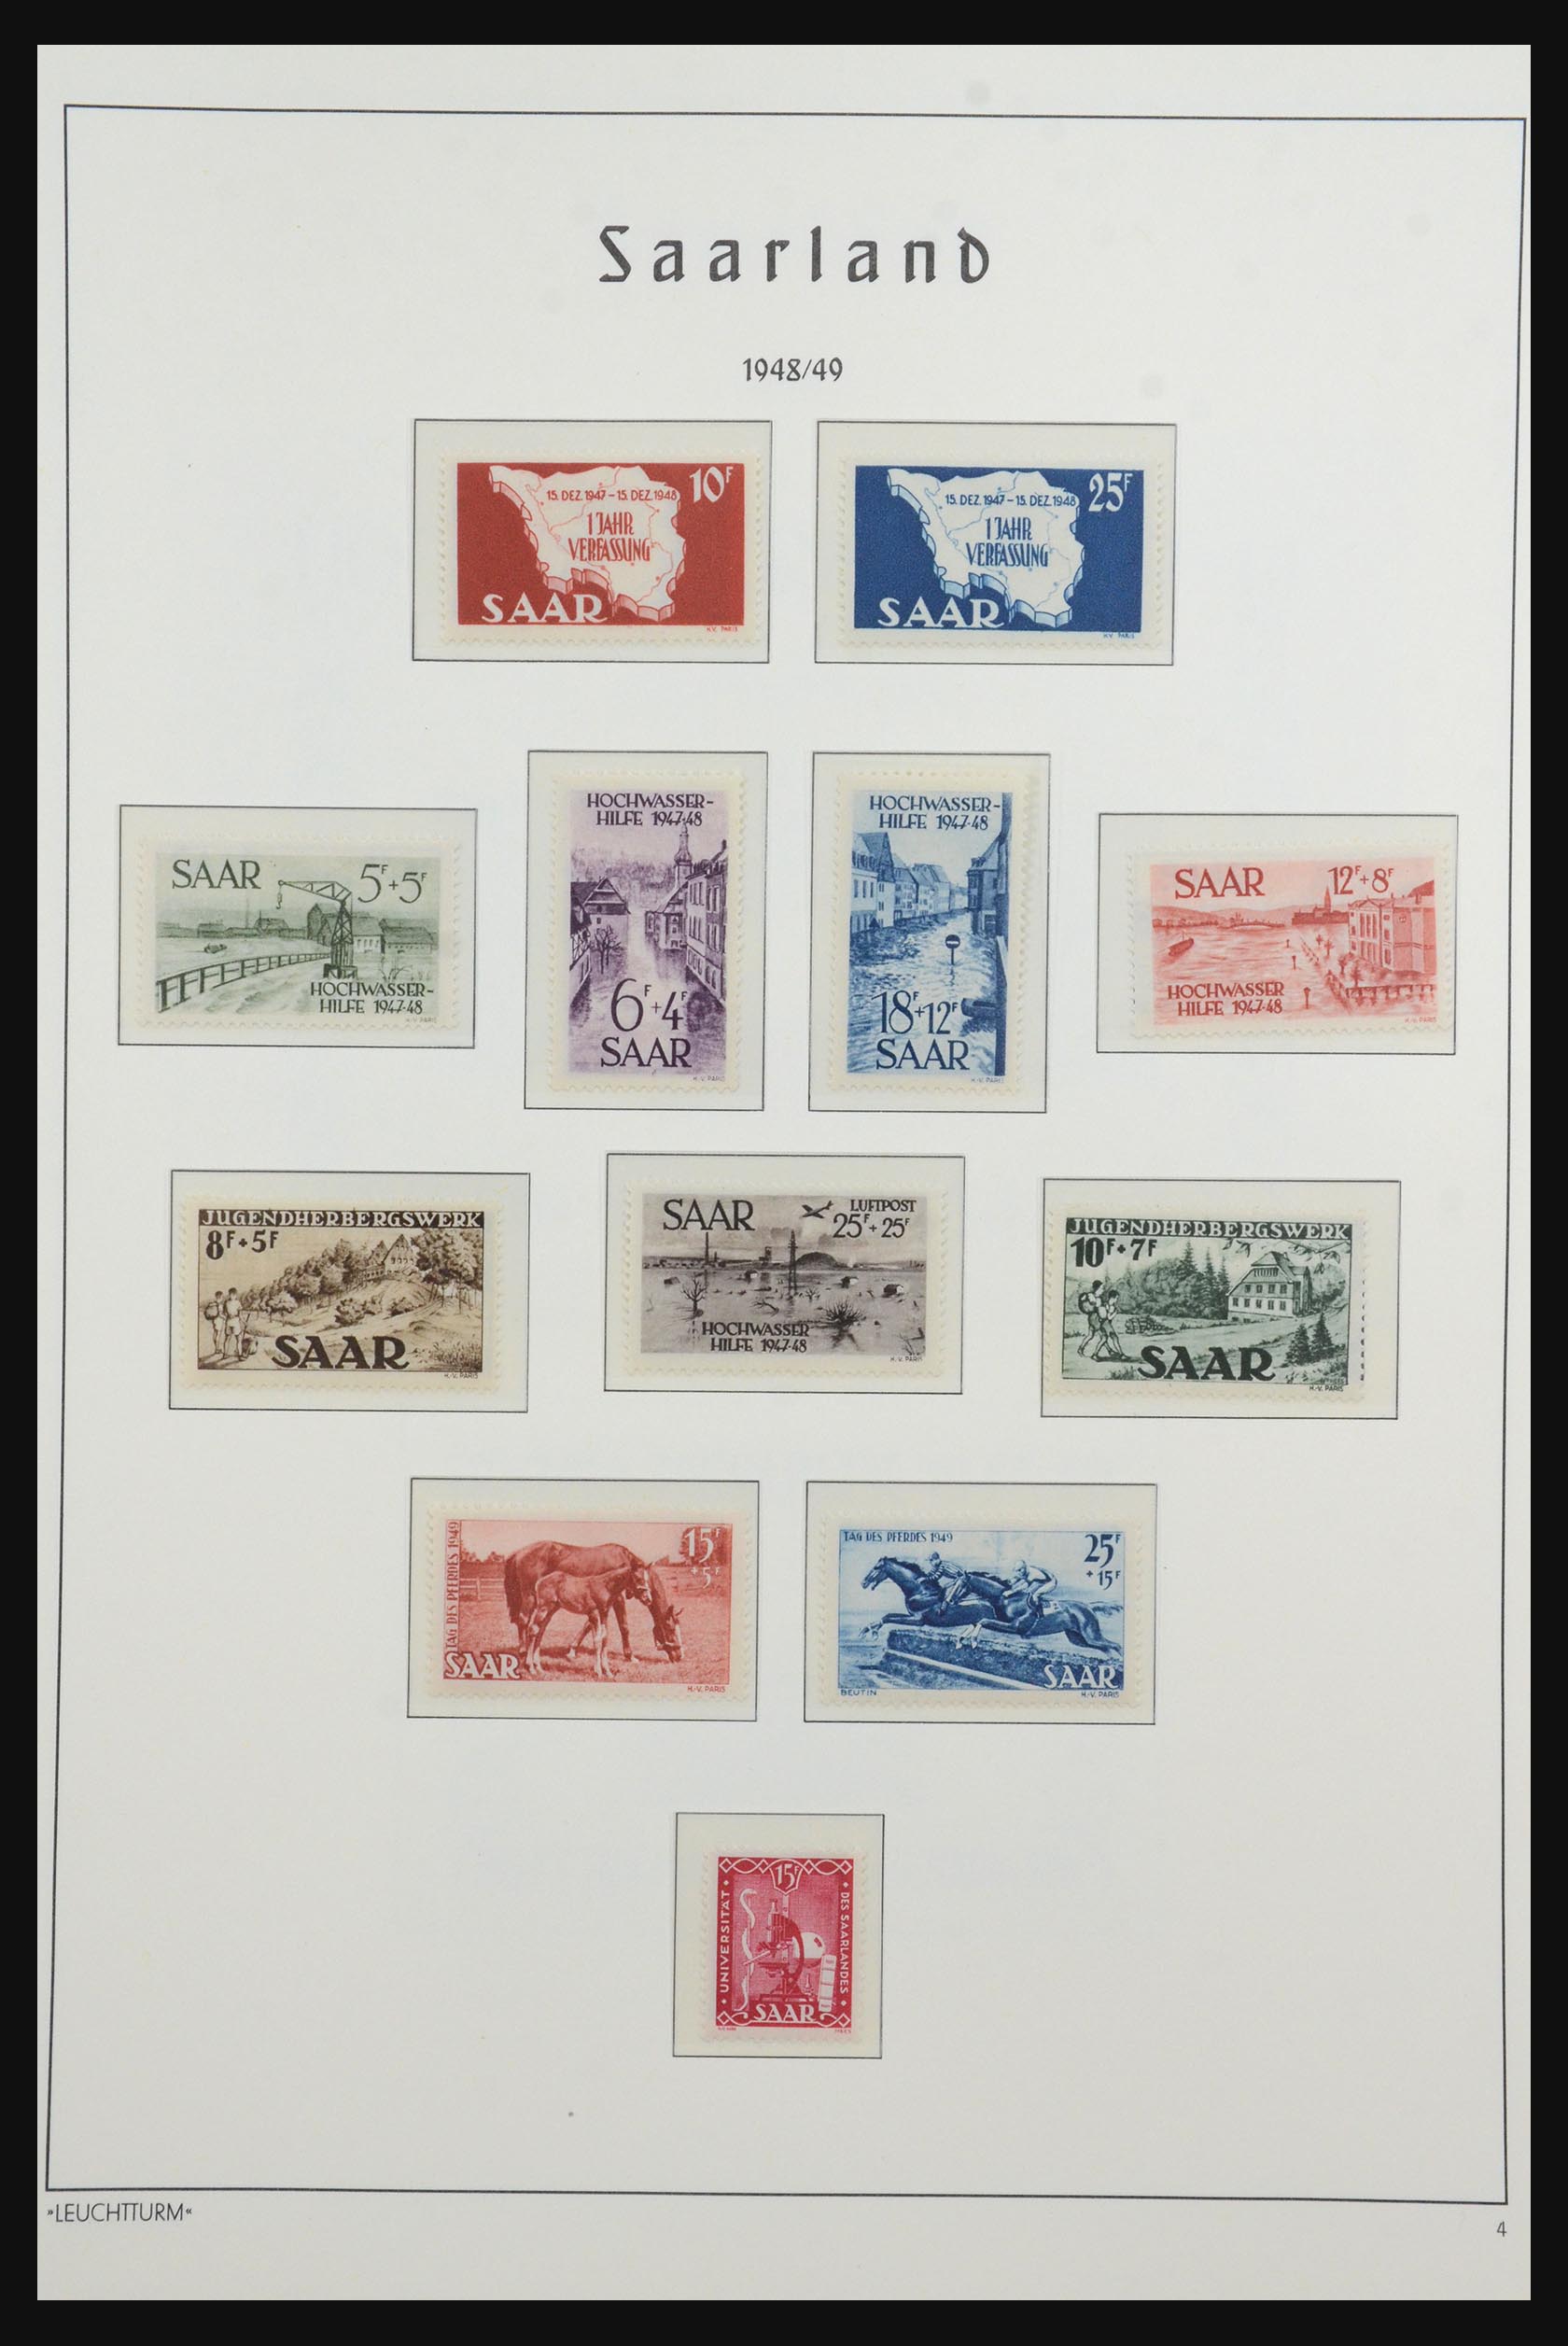 31601 090 - 31601 Bundespost, Berlin and Saar 1948-2008.